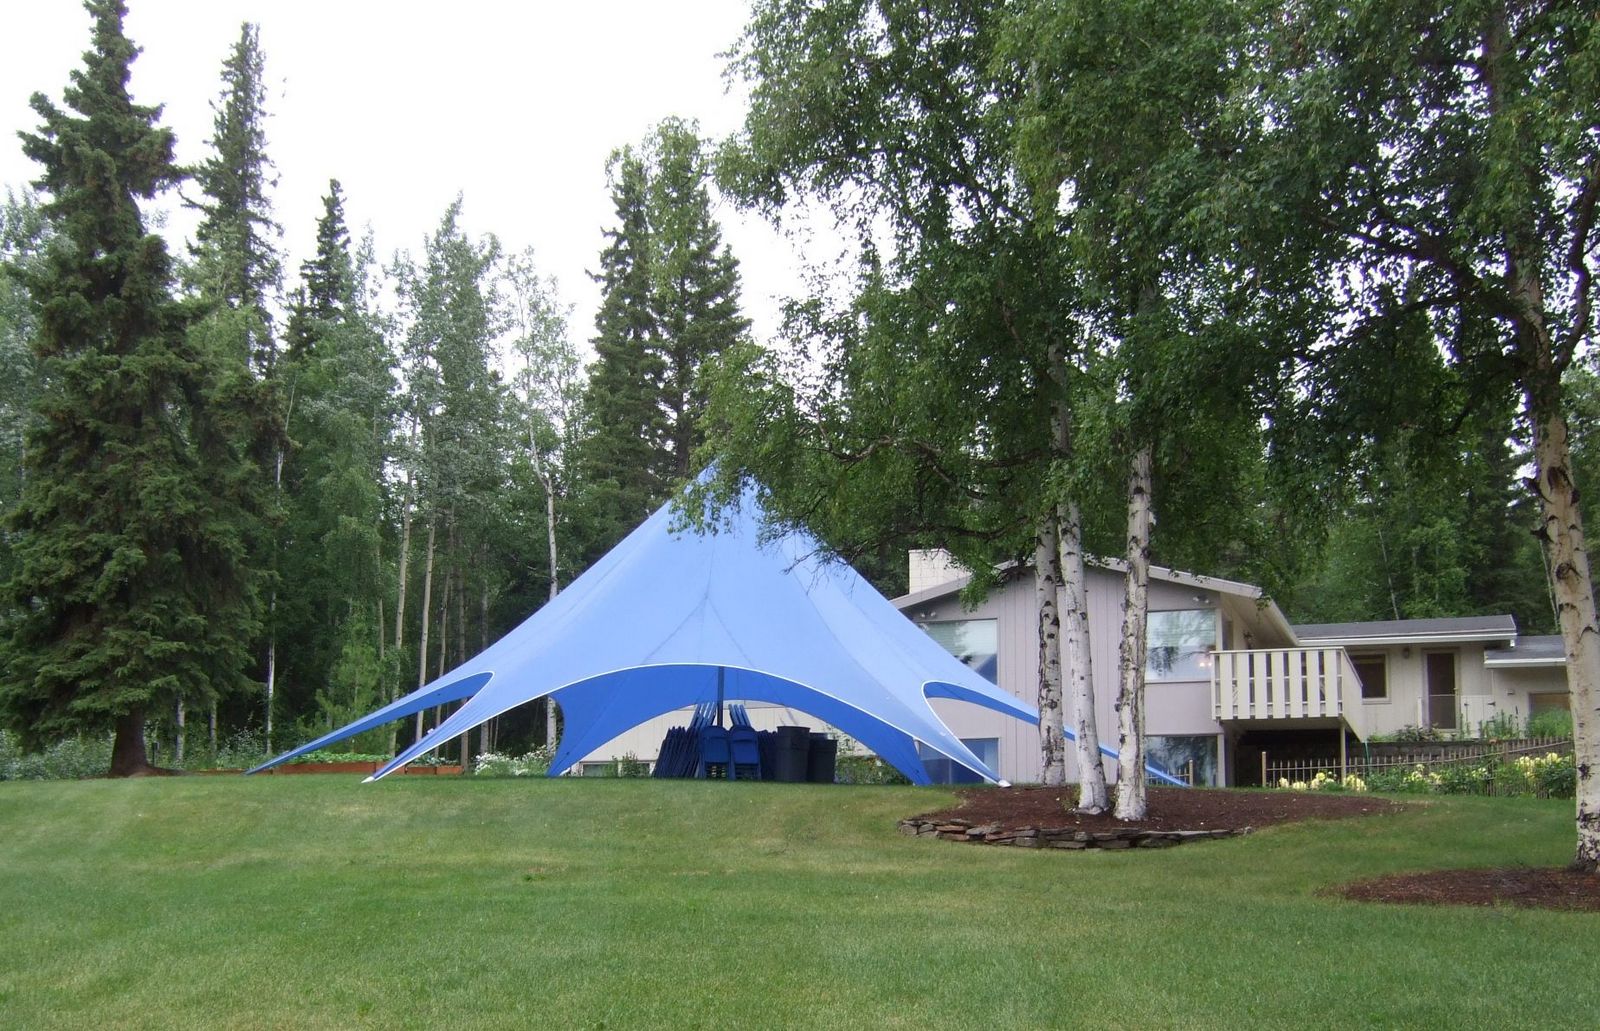 cool tents